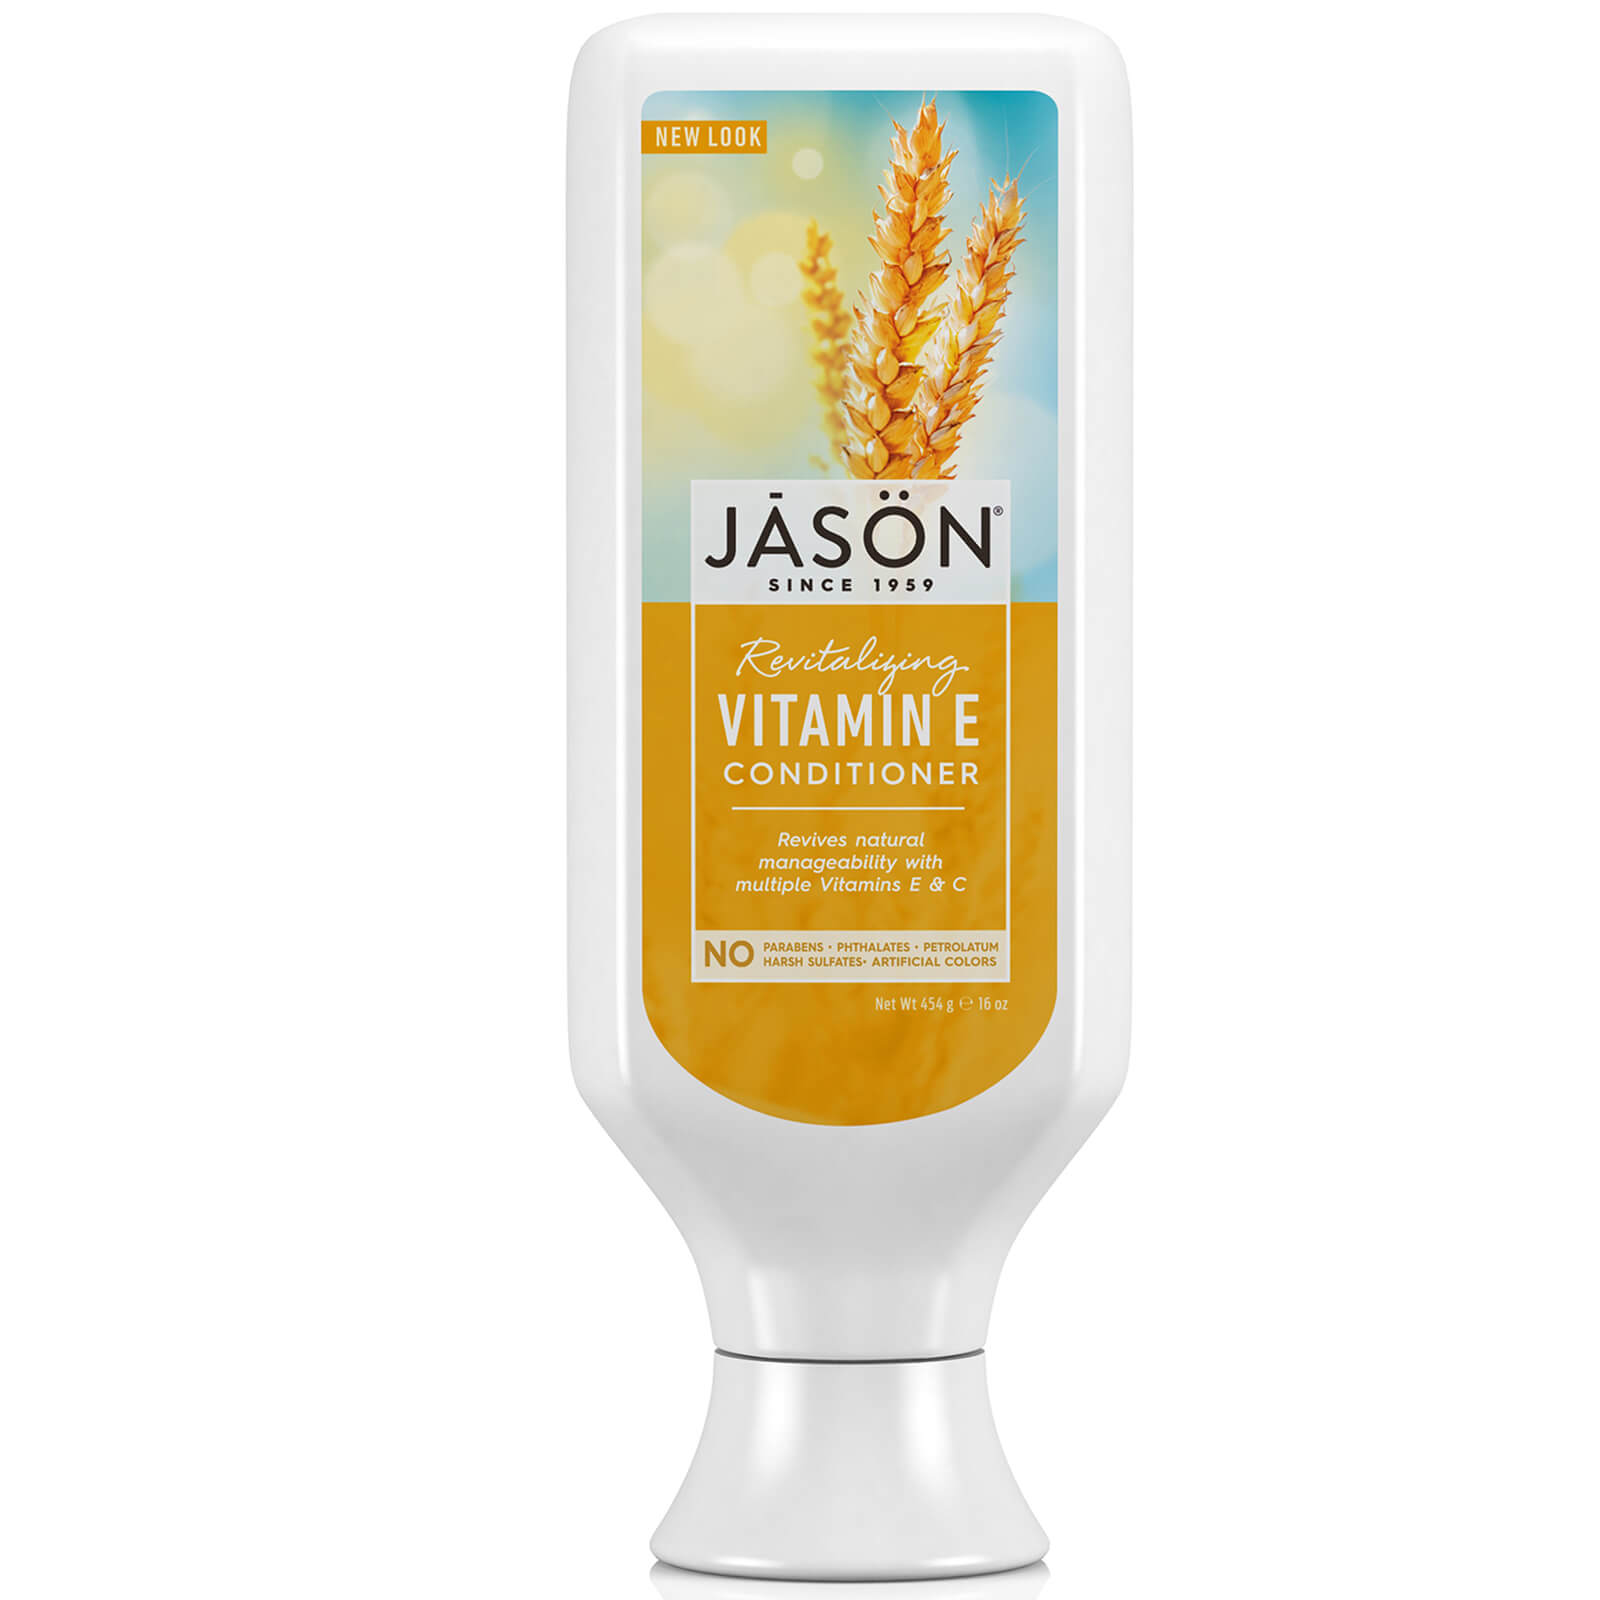 Acondicionador Revitalizing Vitamin E de JASON (454 ml)